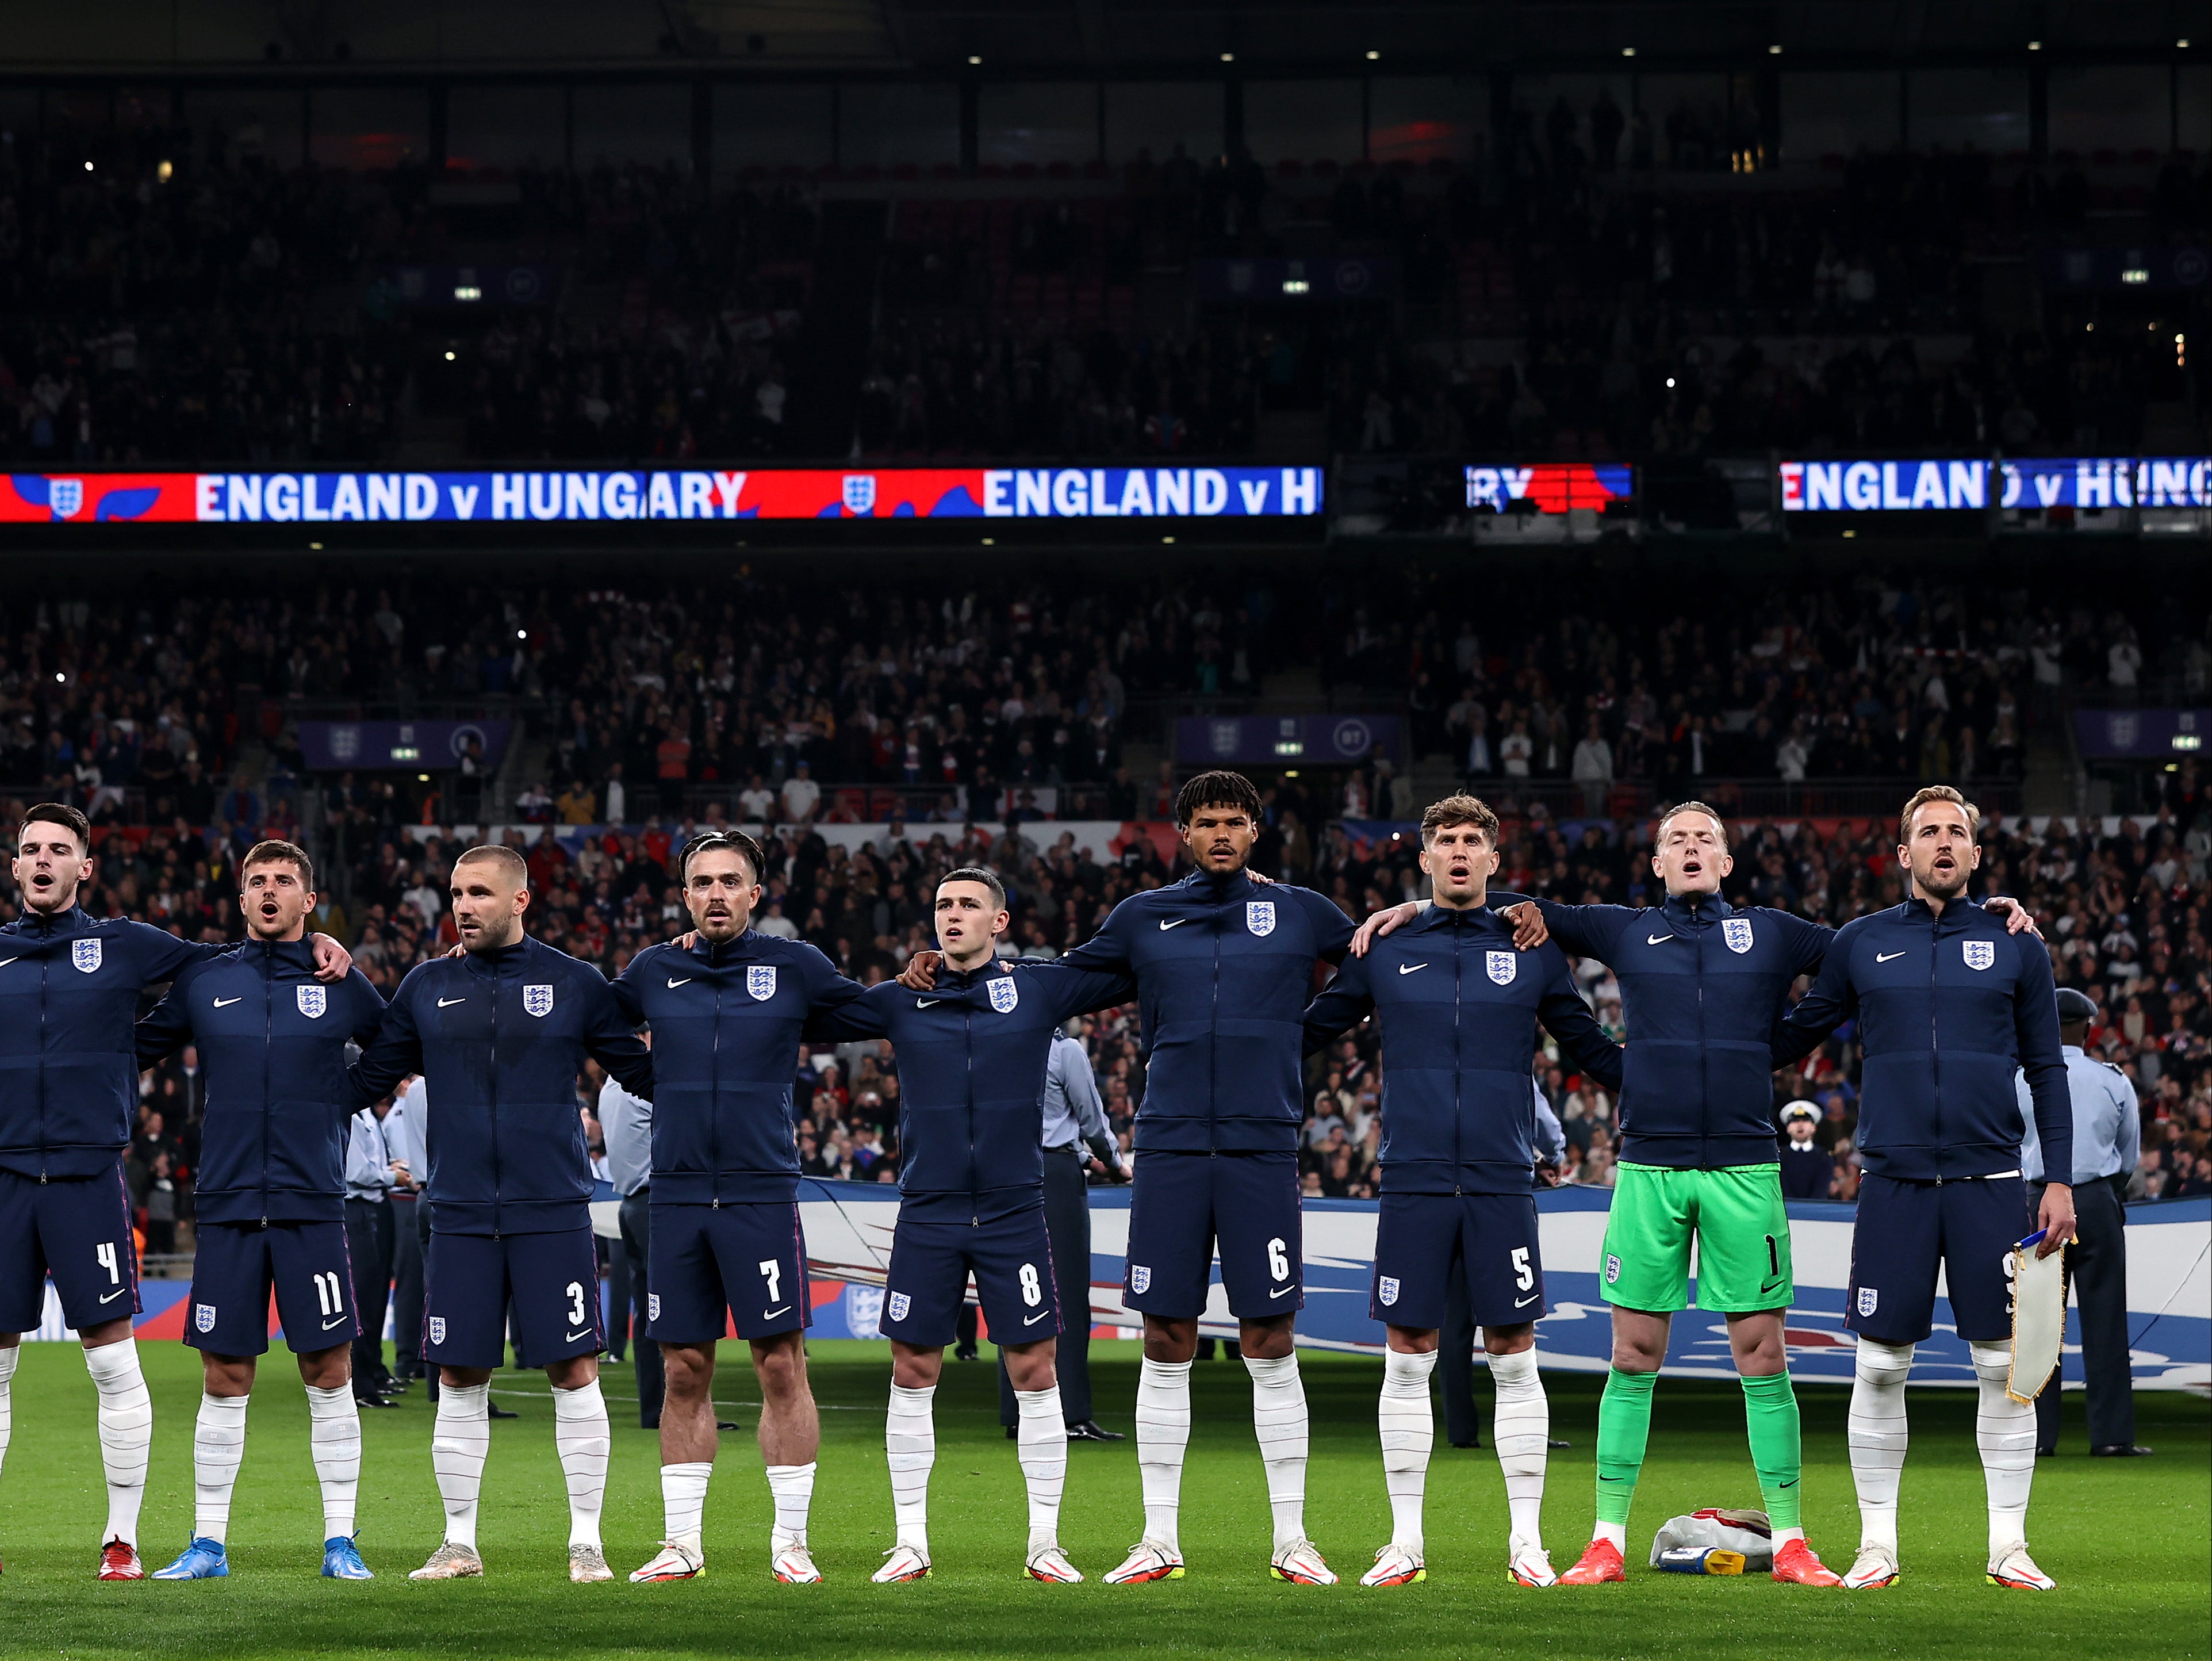 England play Switzerland and Ivory Coast this week